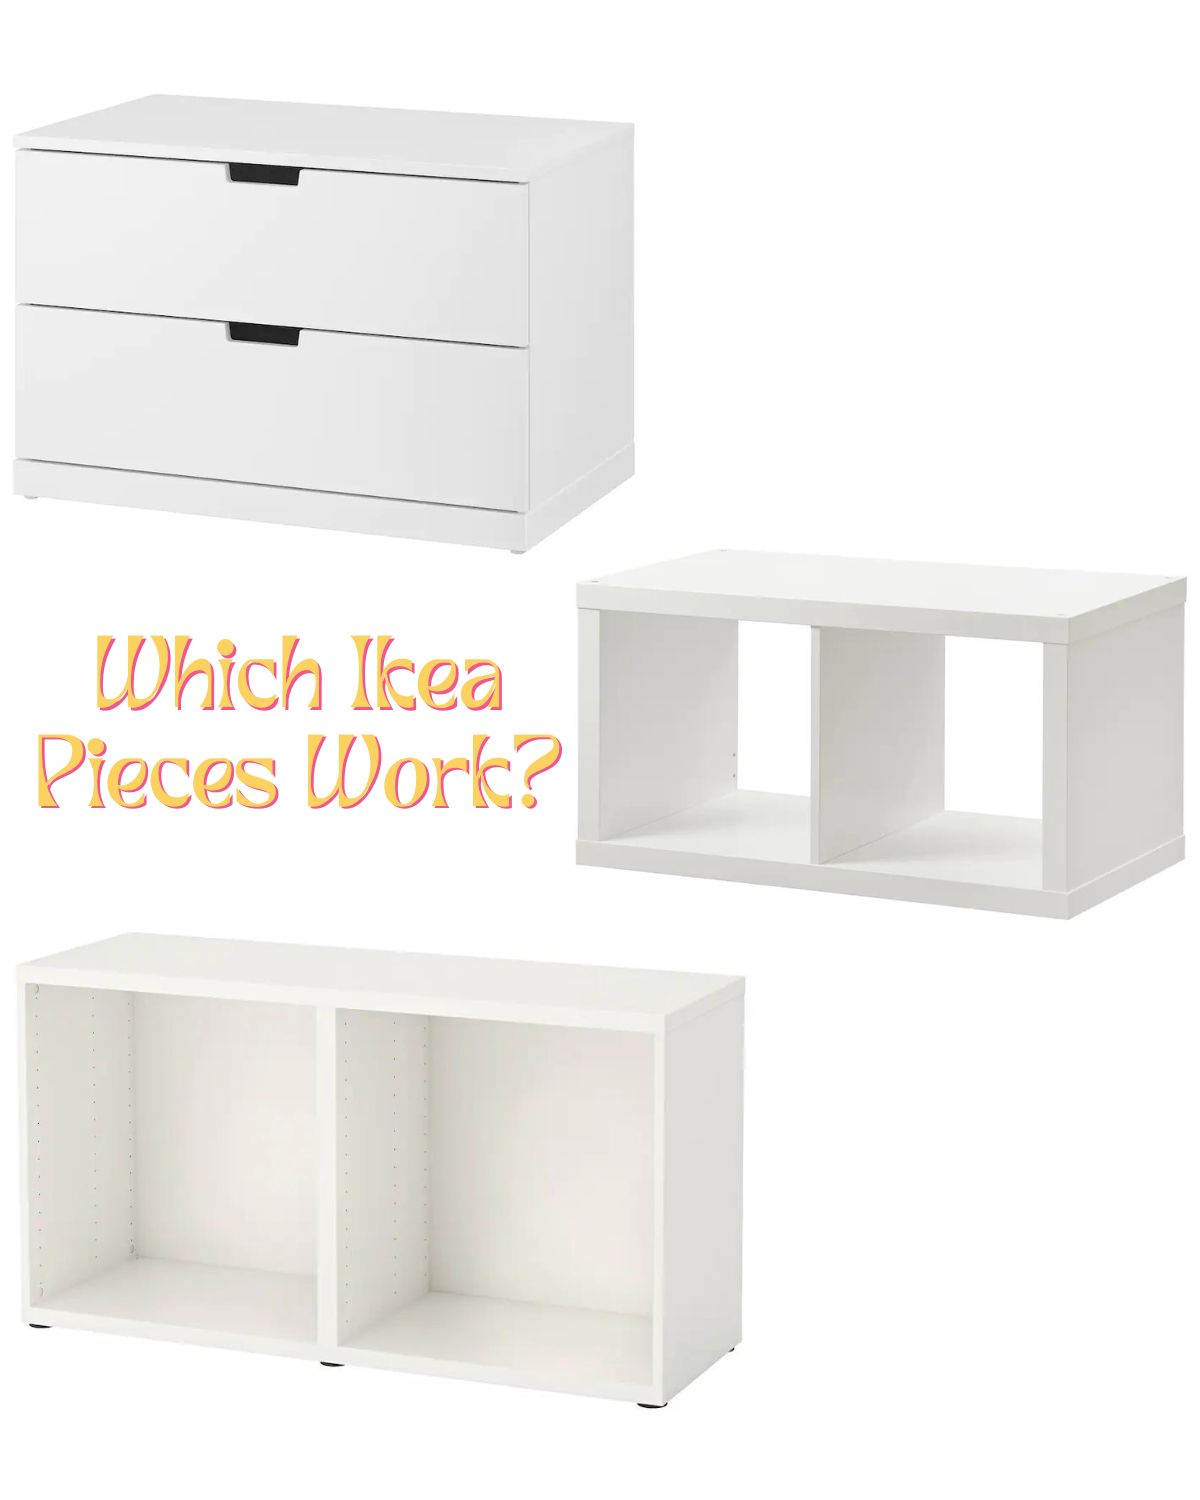 Three different Ikea shelves